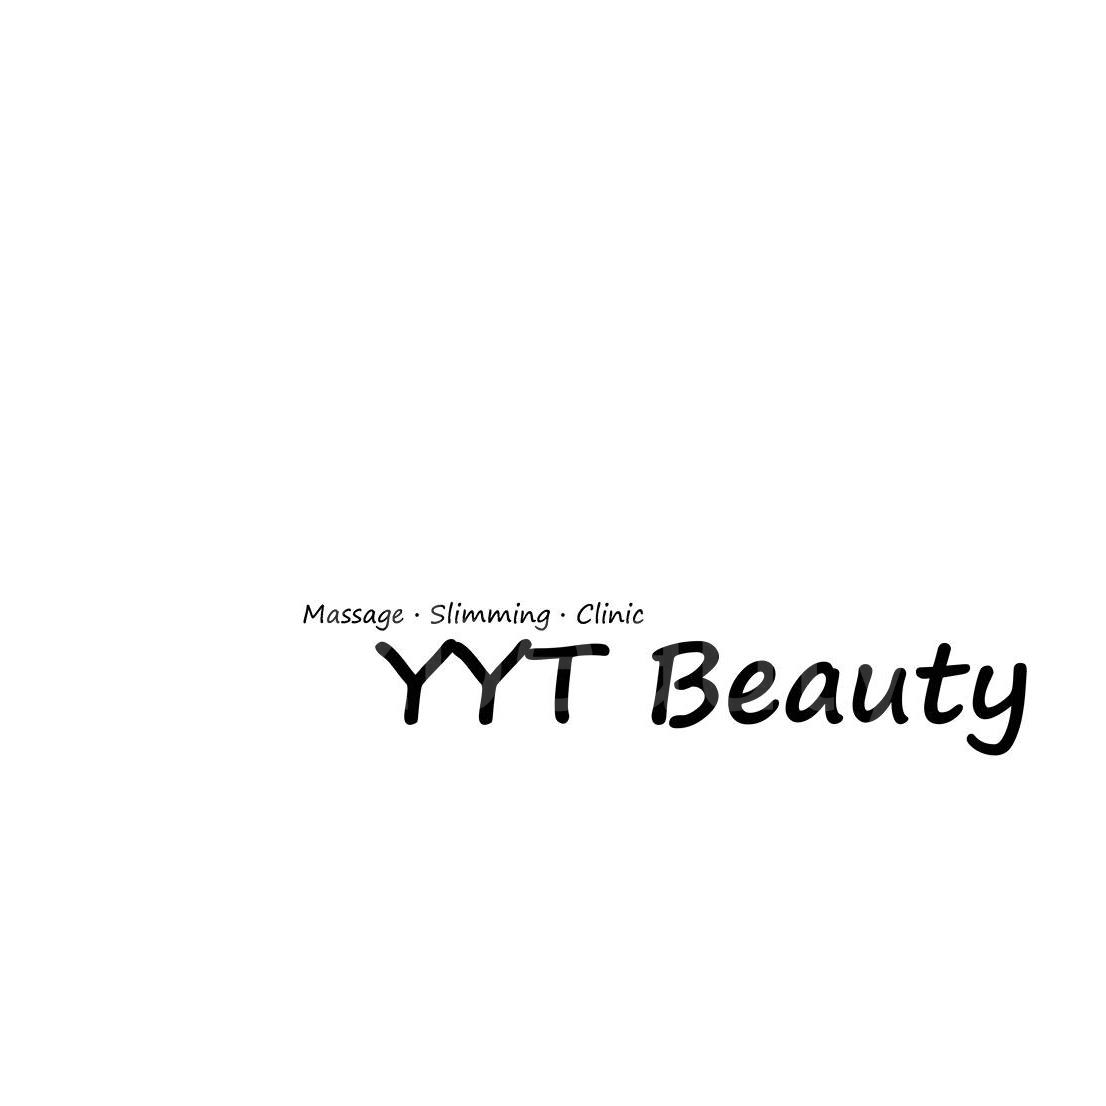 光學美容: YYT Beauty (觀塘)